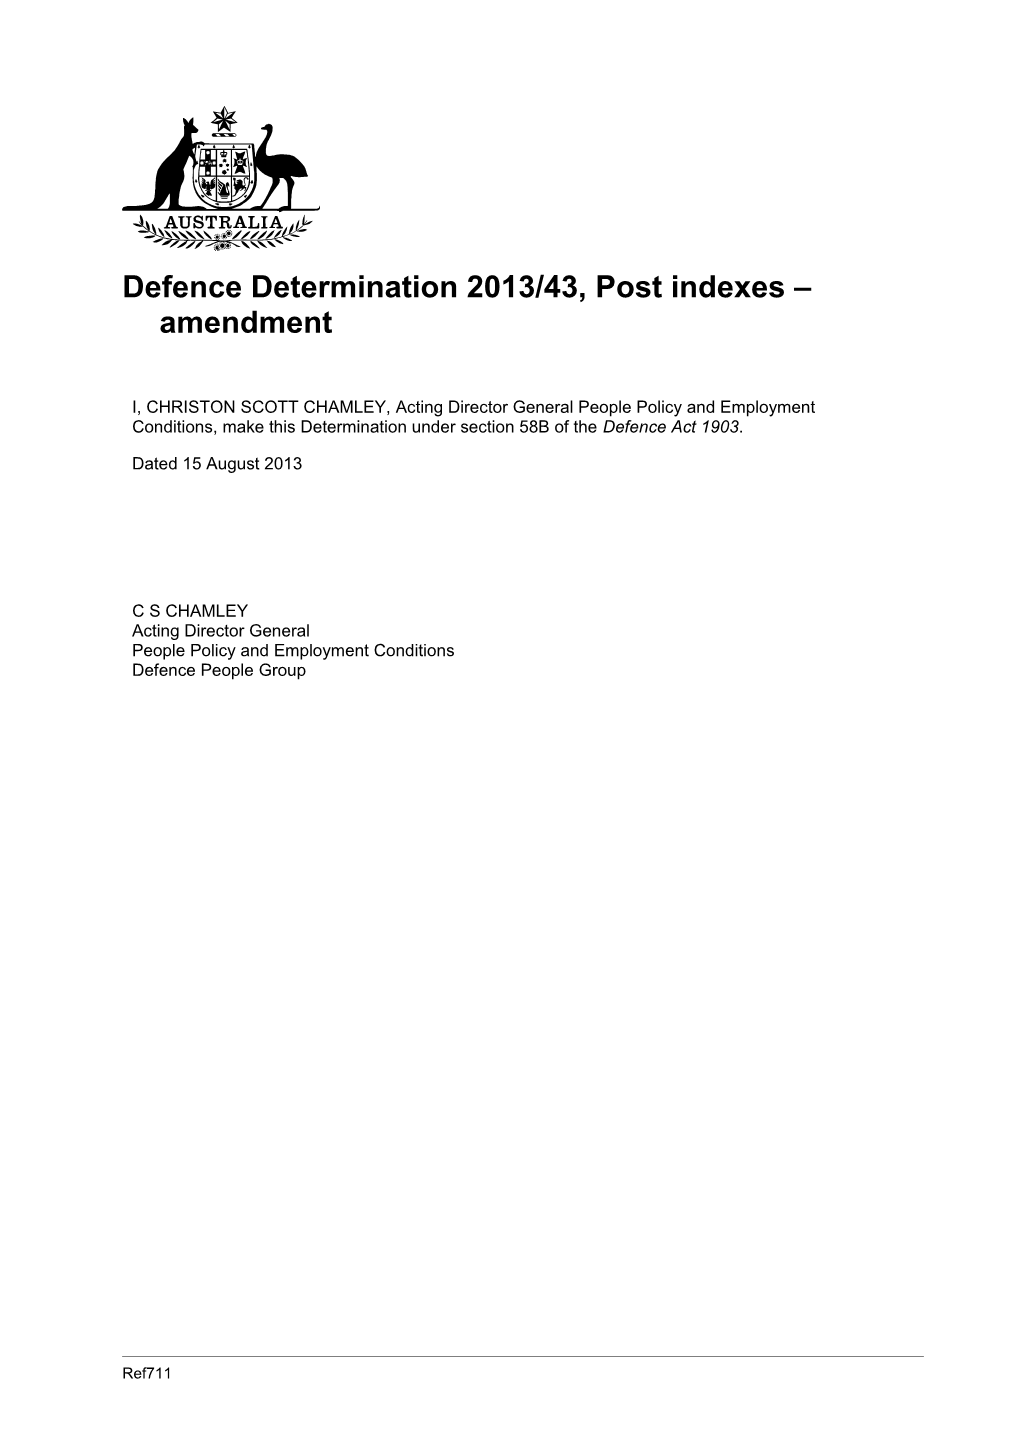 Defence Determination 2013/43, Post Indexes Amendment